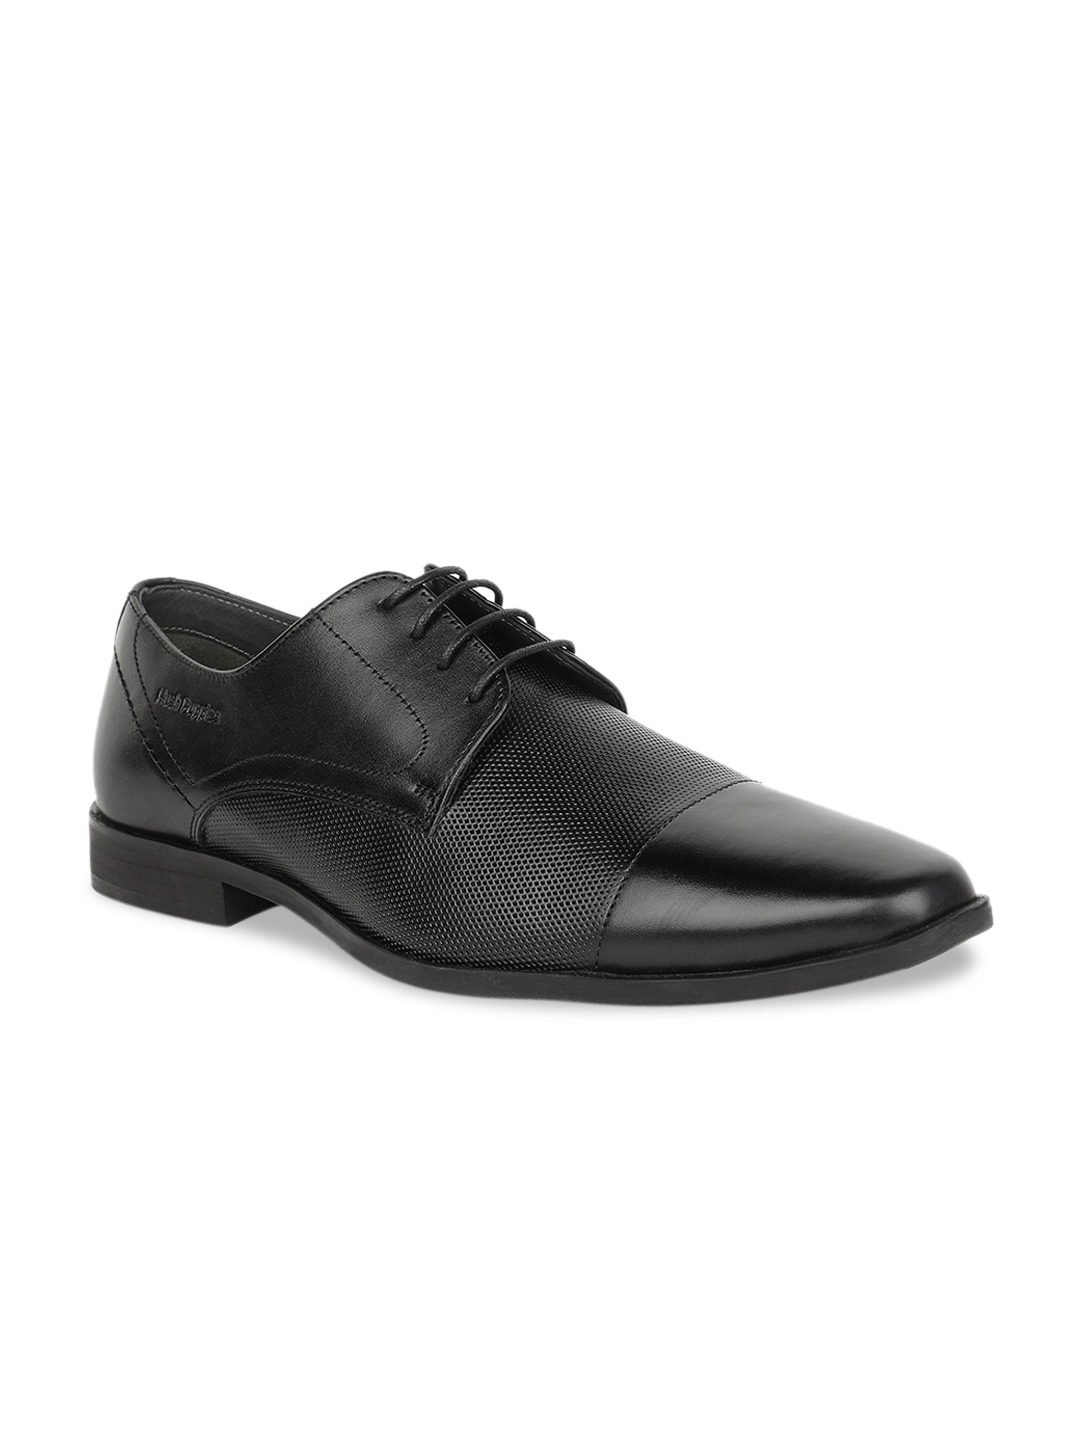 Buy Hush Puppies Men Black Solid Formal Leather Derbys - Formal Shoes ...